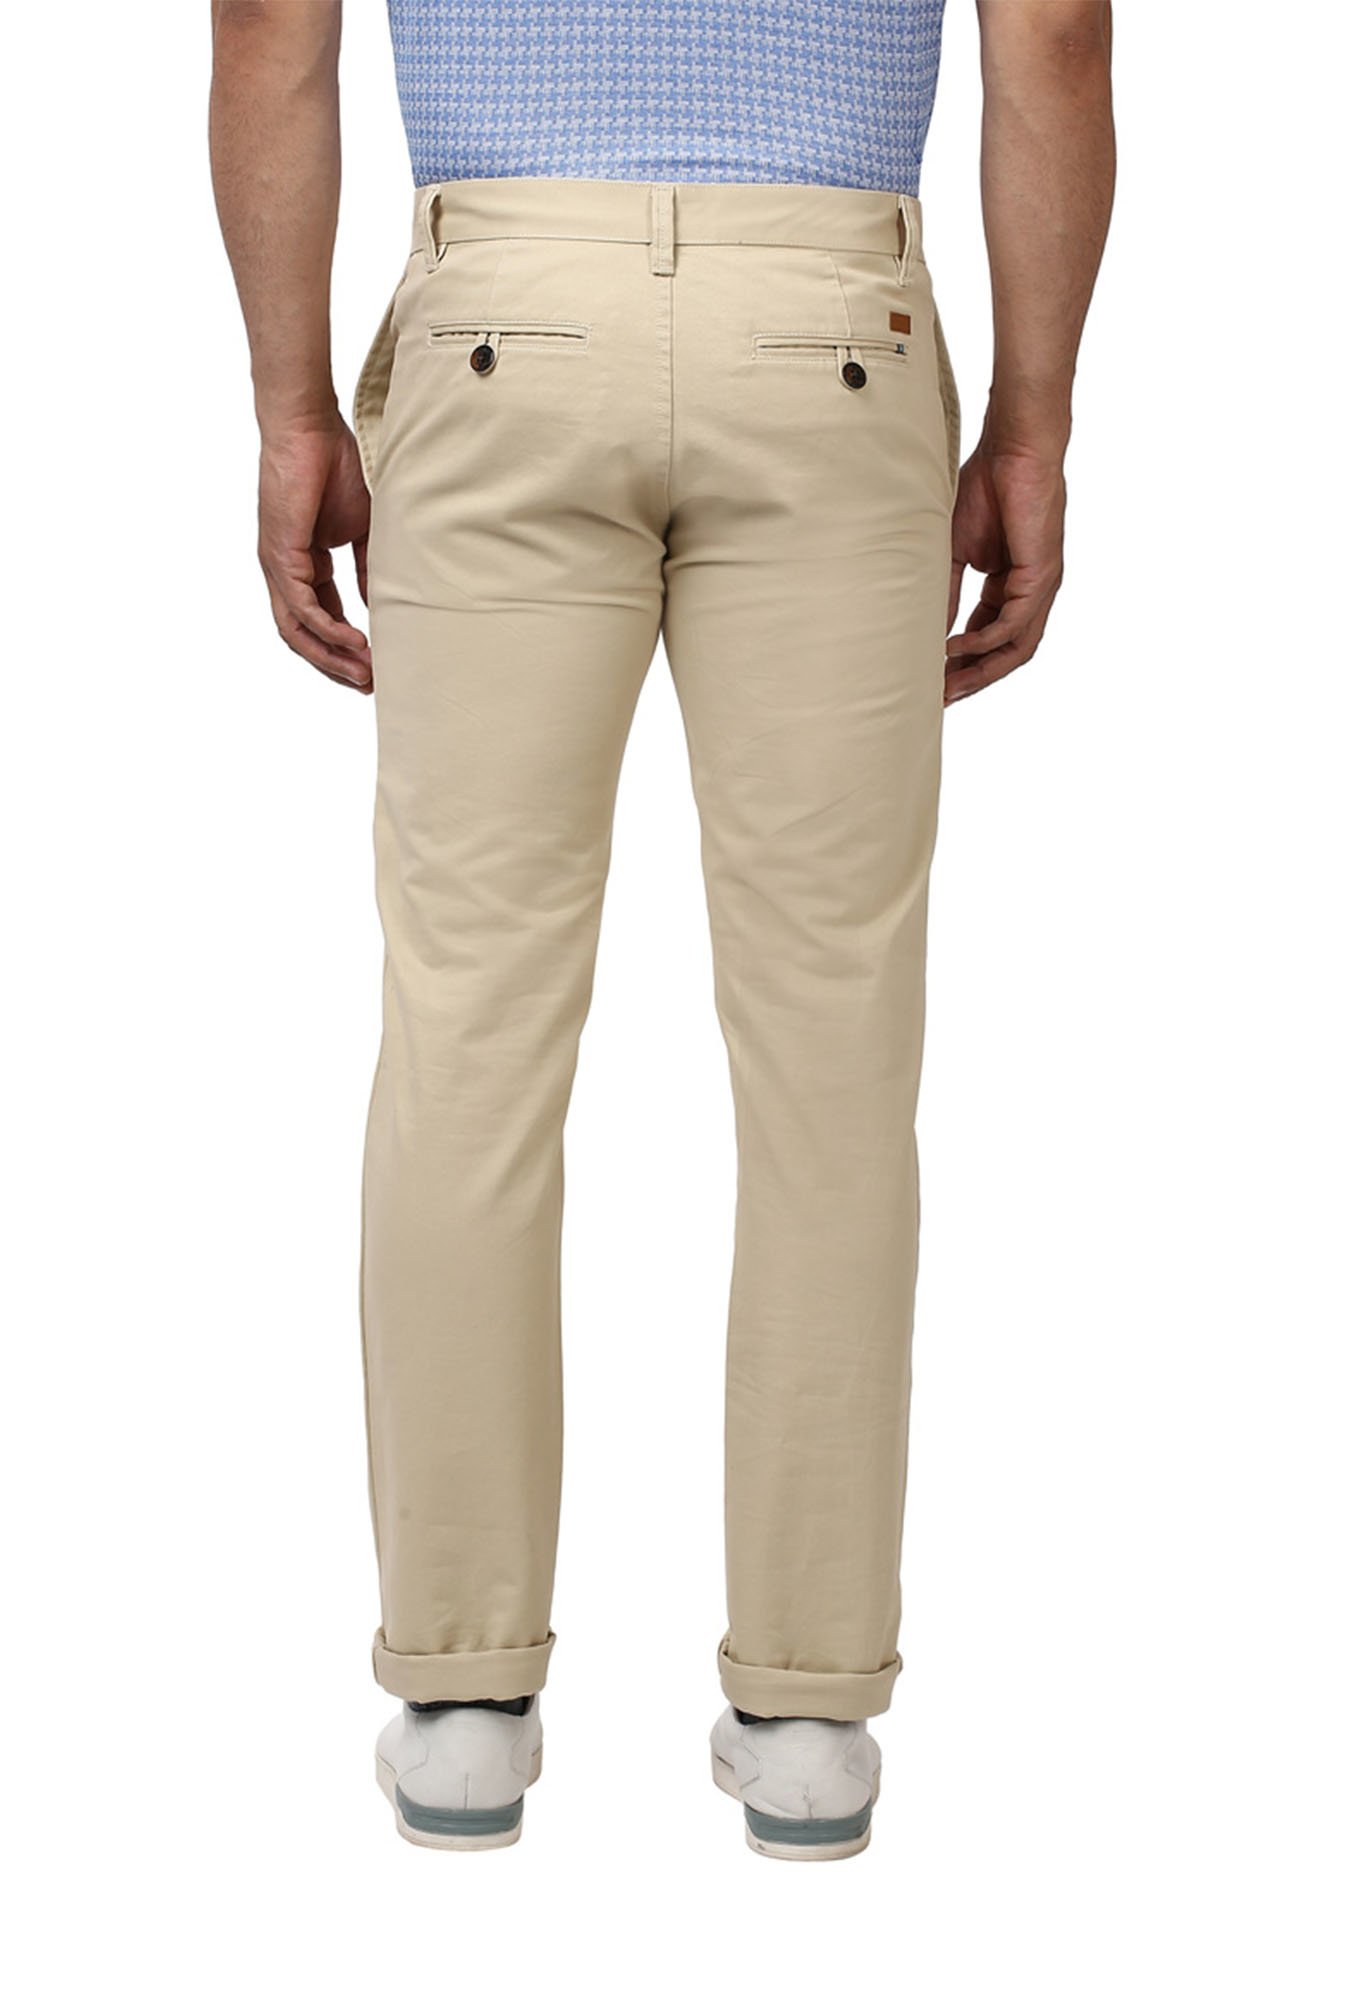 Duke Stardust Men Slim Fit Cotton Trousers SDT4580